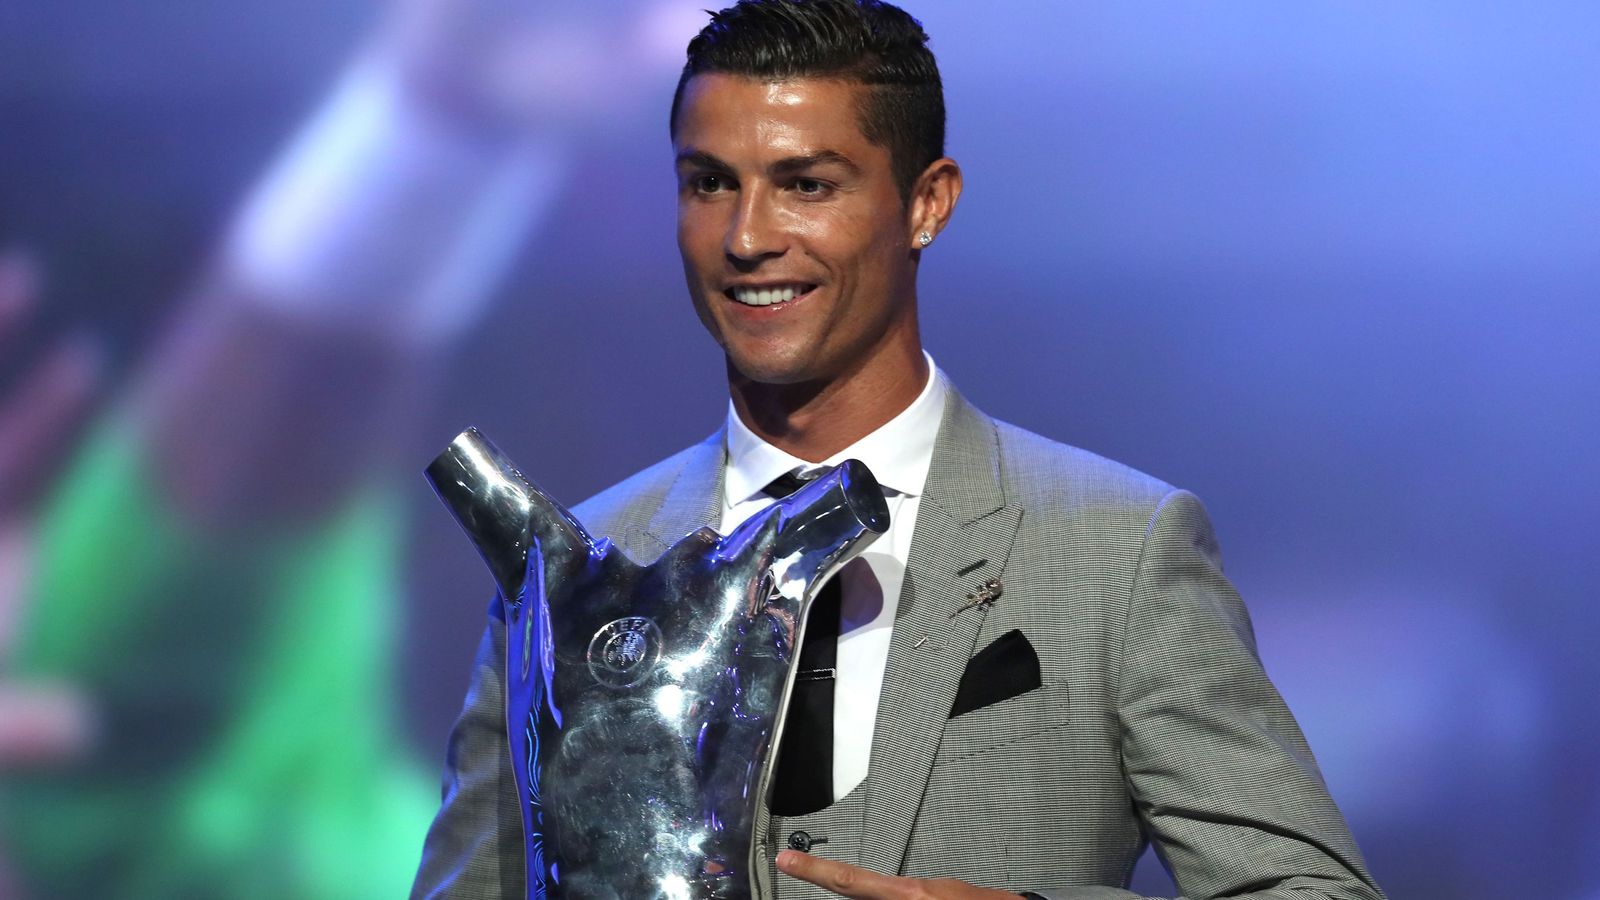 Cristiano Ronaldo: top UEFA competition scorer of 2019 and the decade, UEFA Champions League